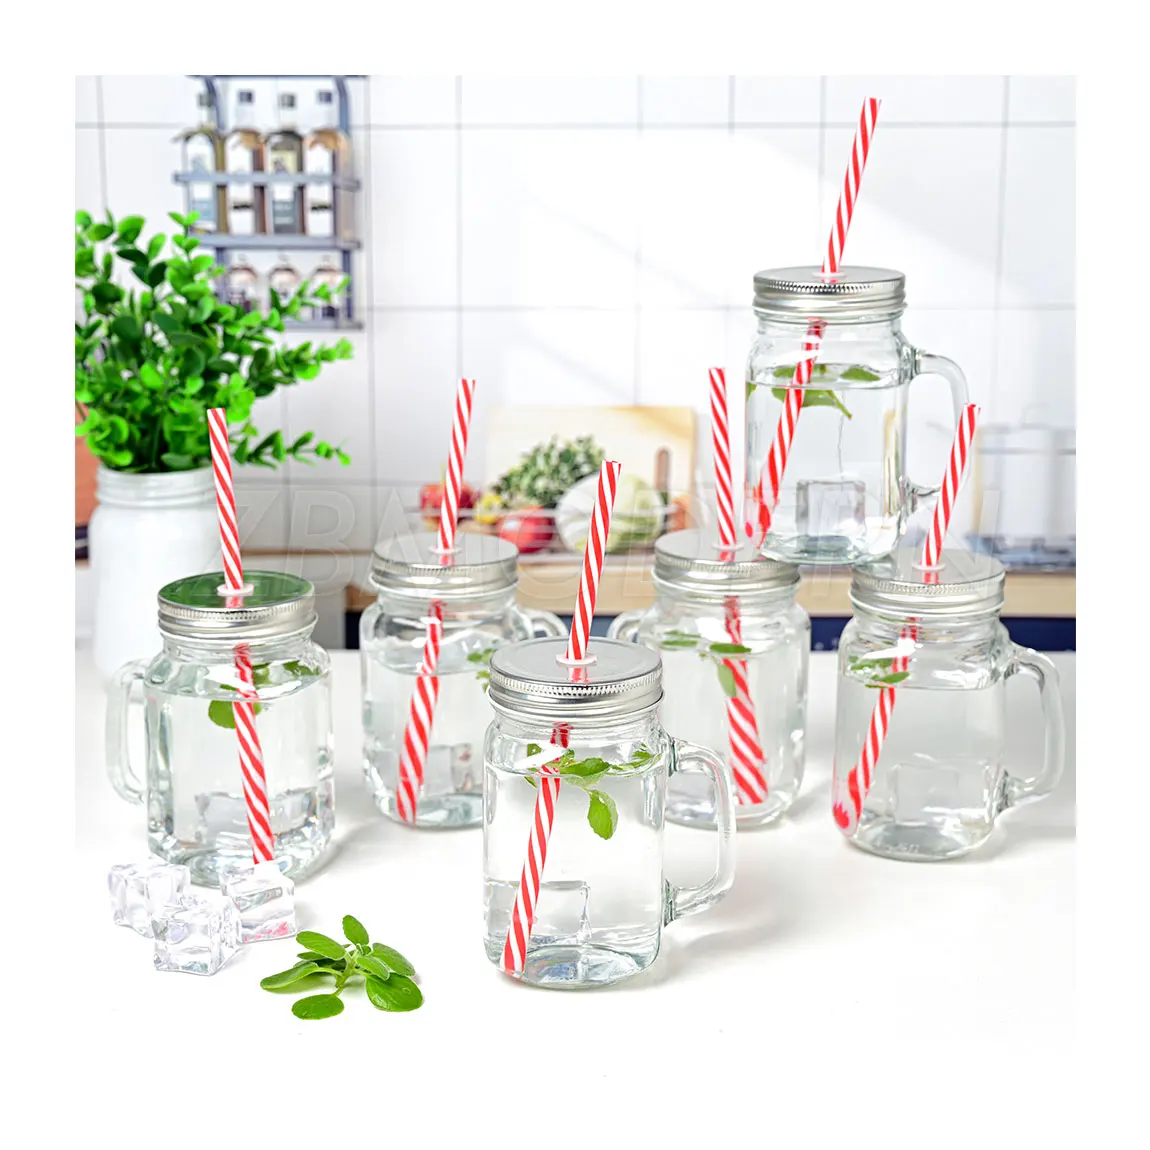 Plastic lids Straw Lids Gift Ideas 16 oz Mason Jar with Handle Silicone Straws Drinking Glasses 6 Pack Fun Drinks Beer Mug 